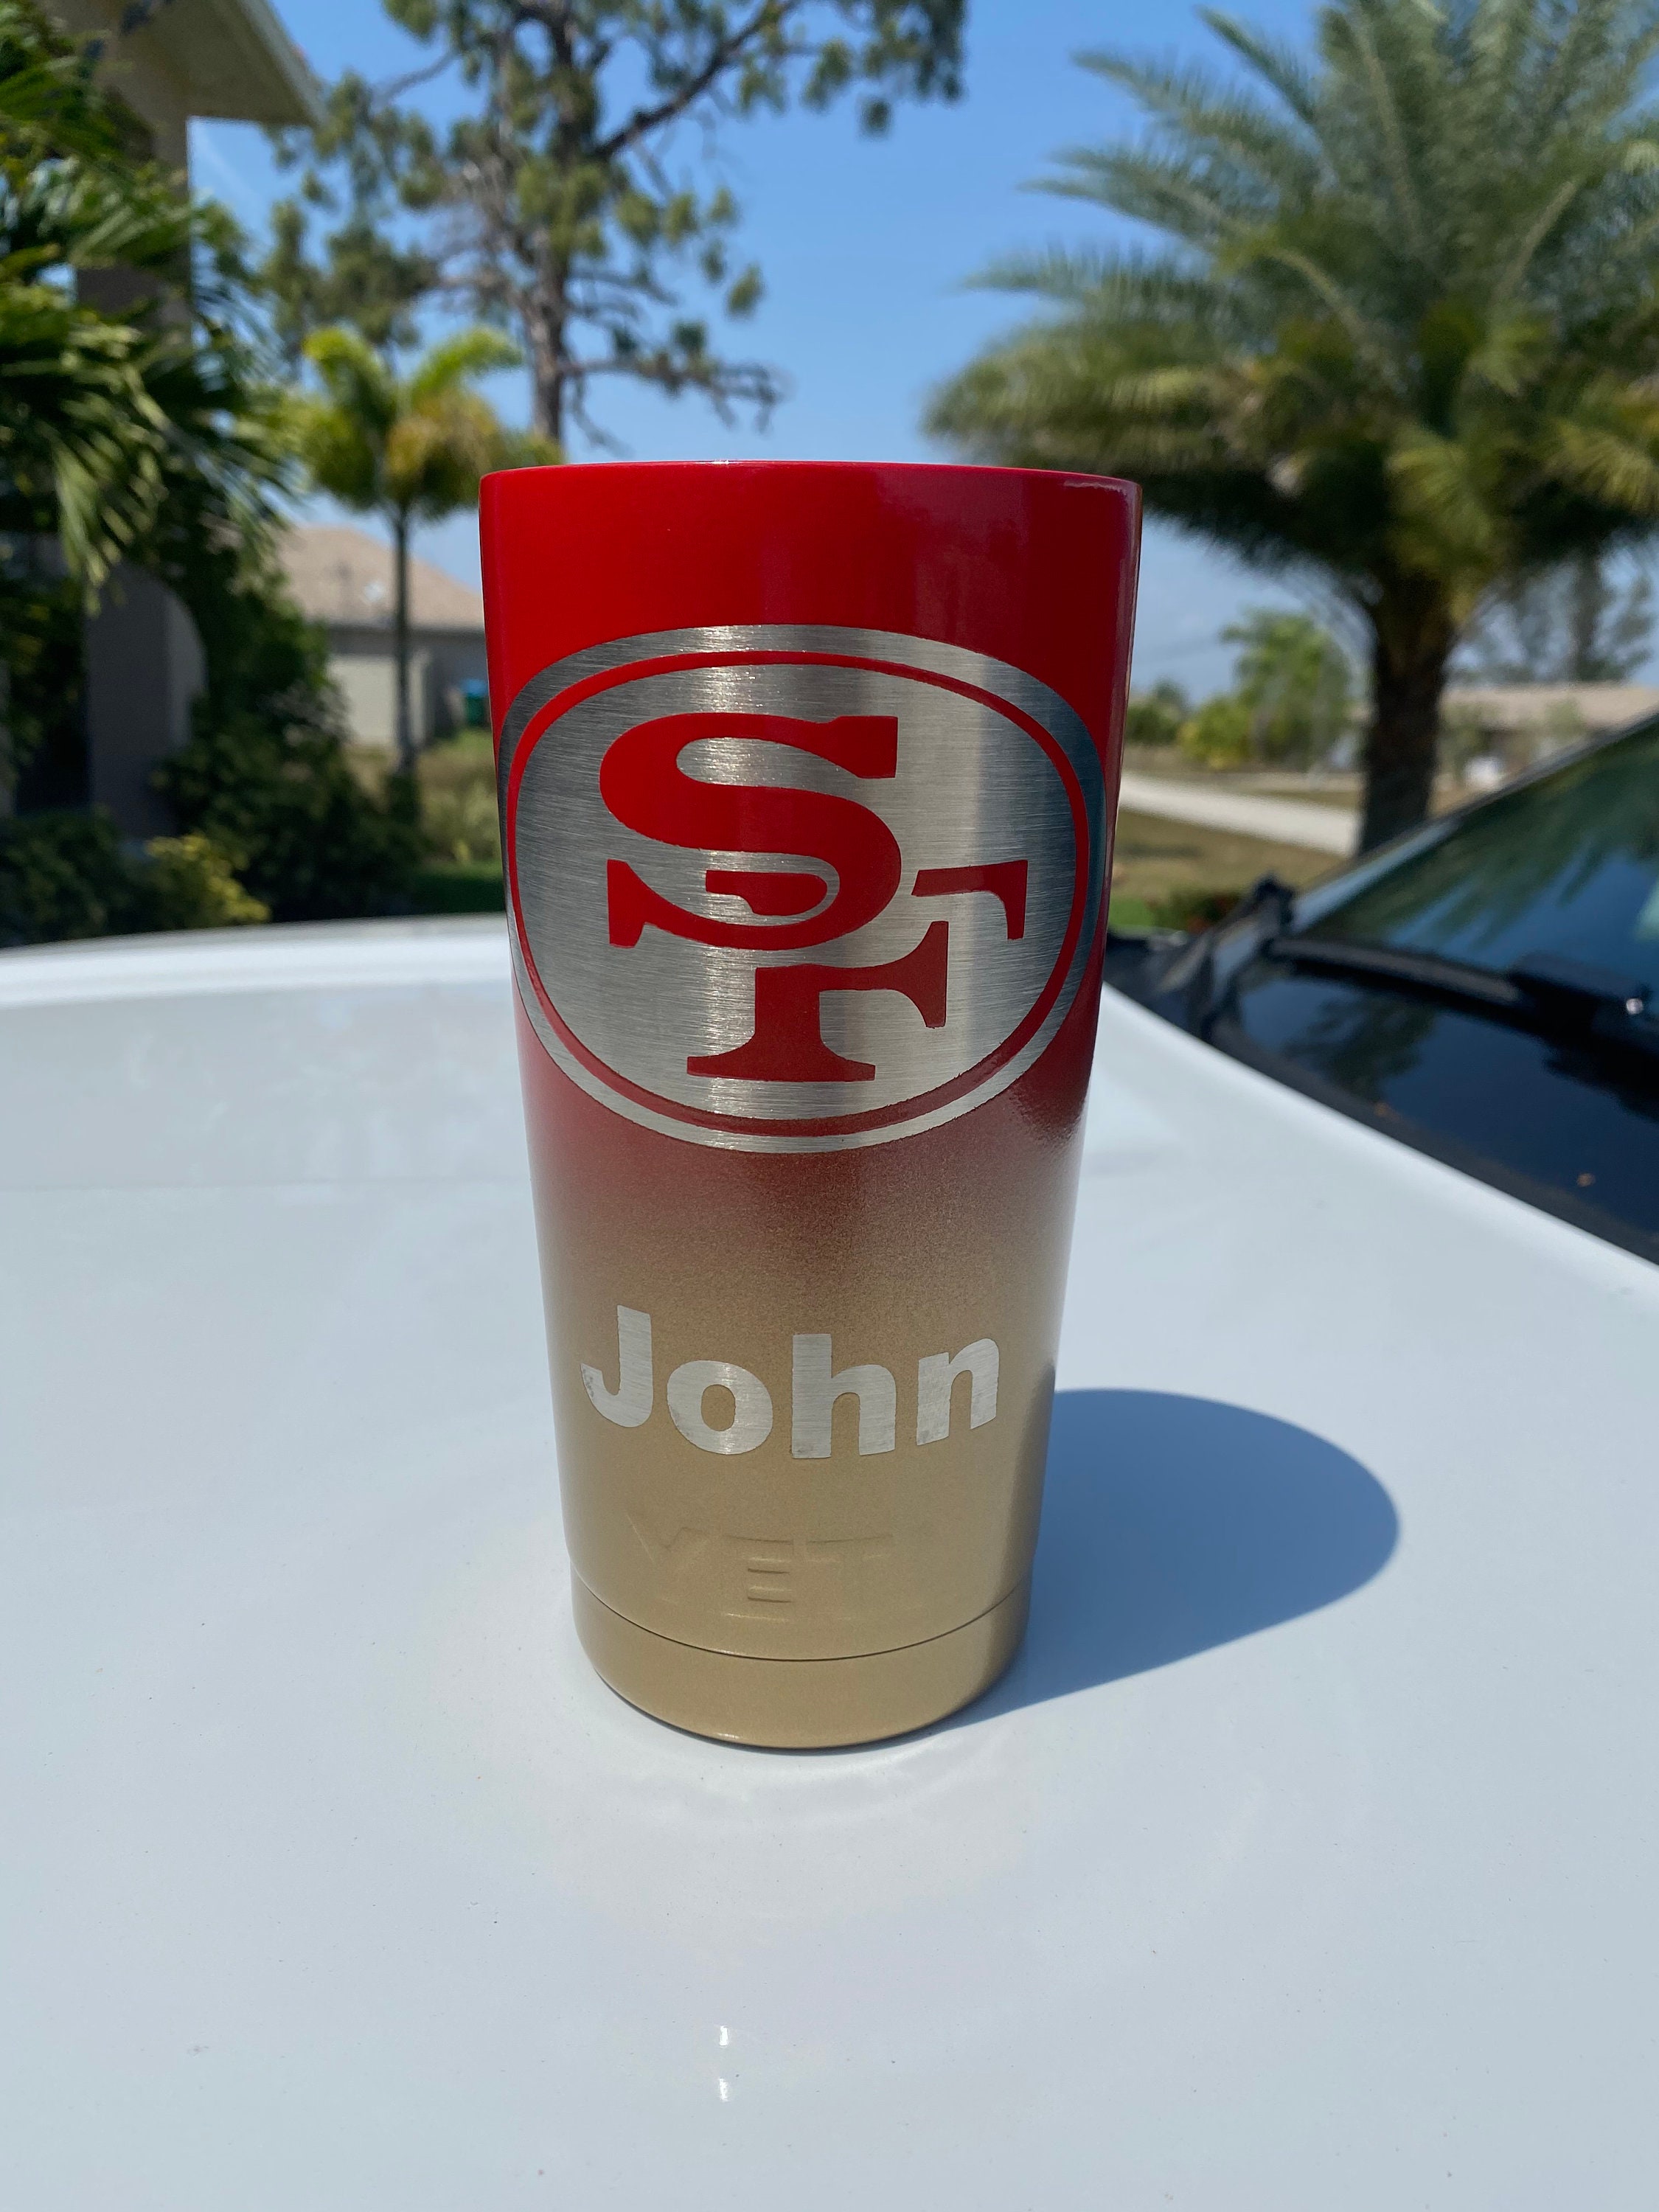 San Francisco 49ers NFL Custom Stainless Steel Cup Tumbler Yeti 